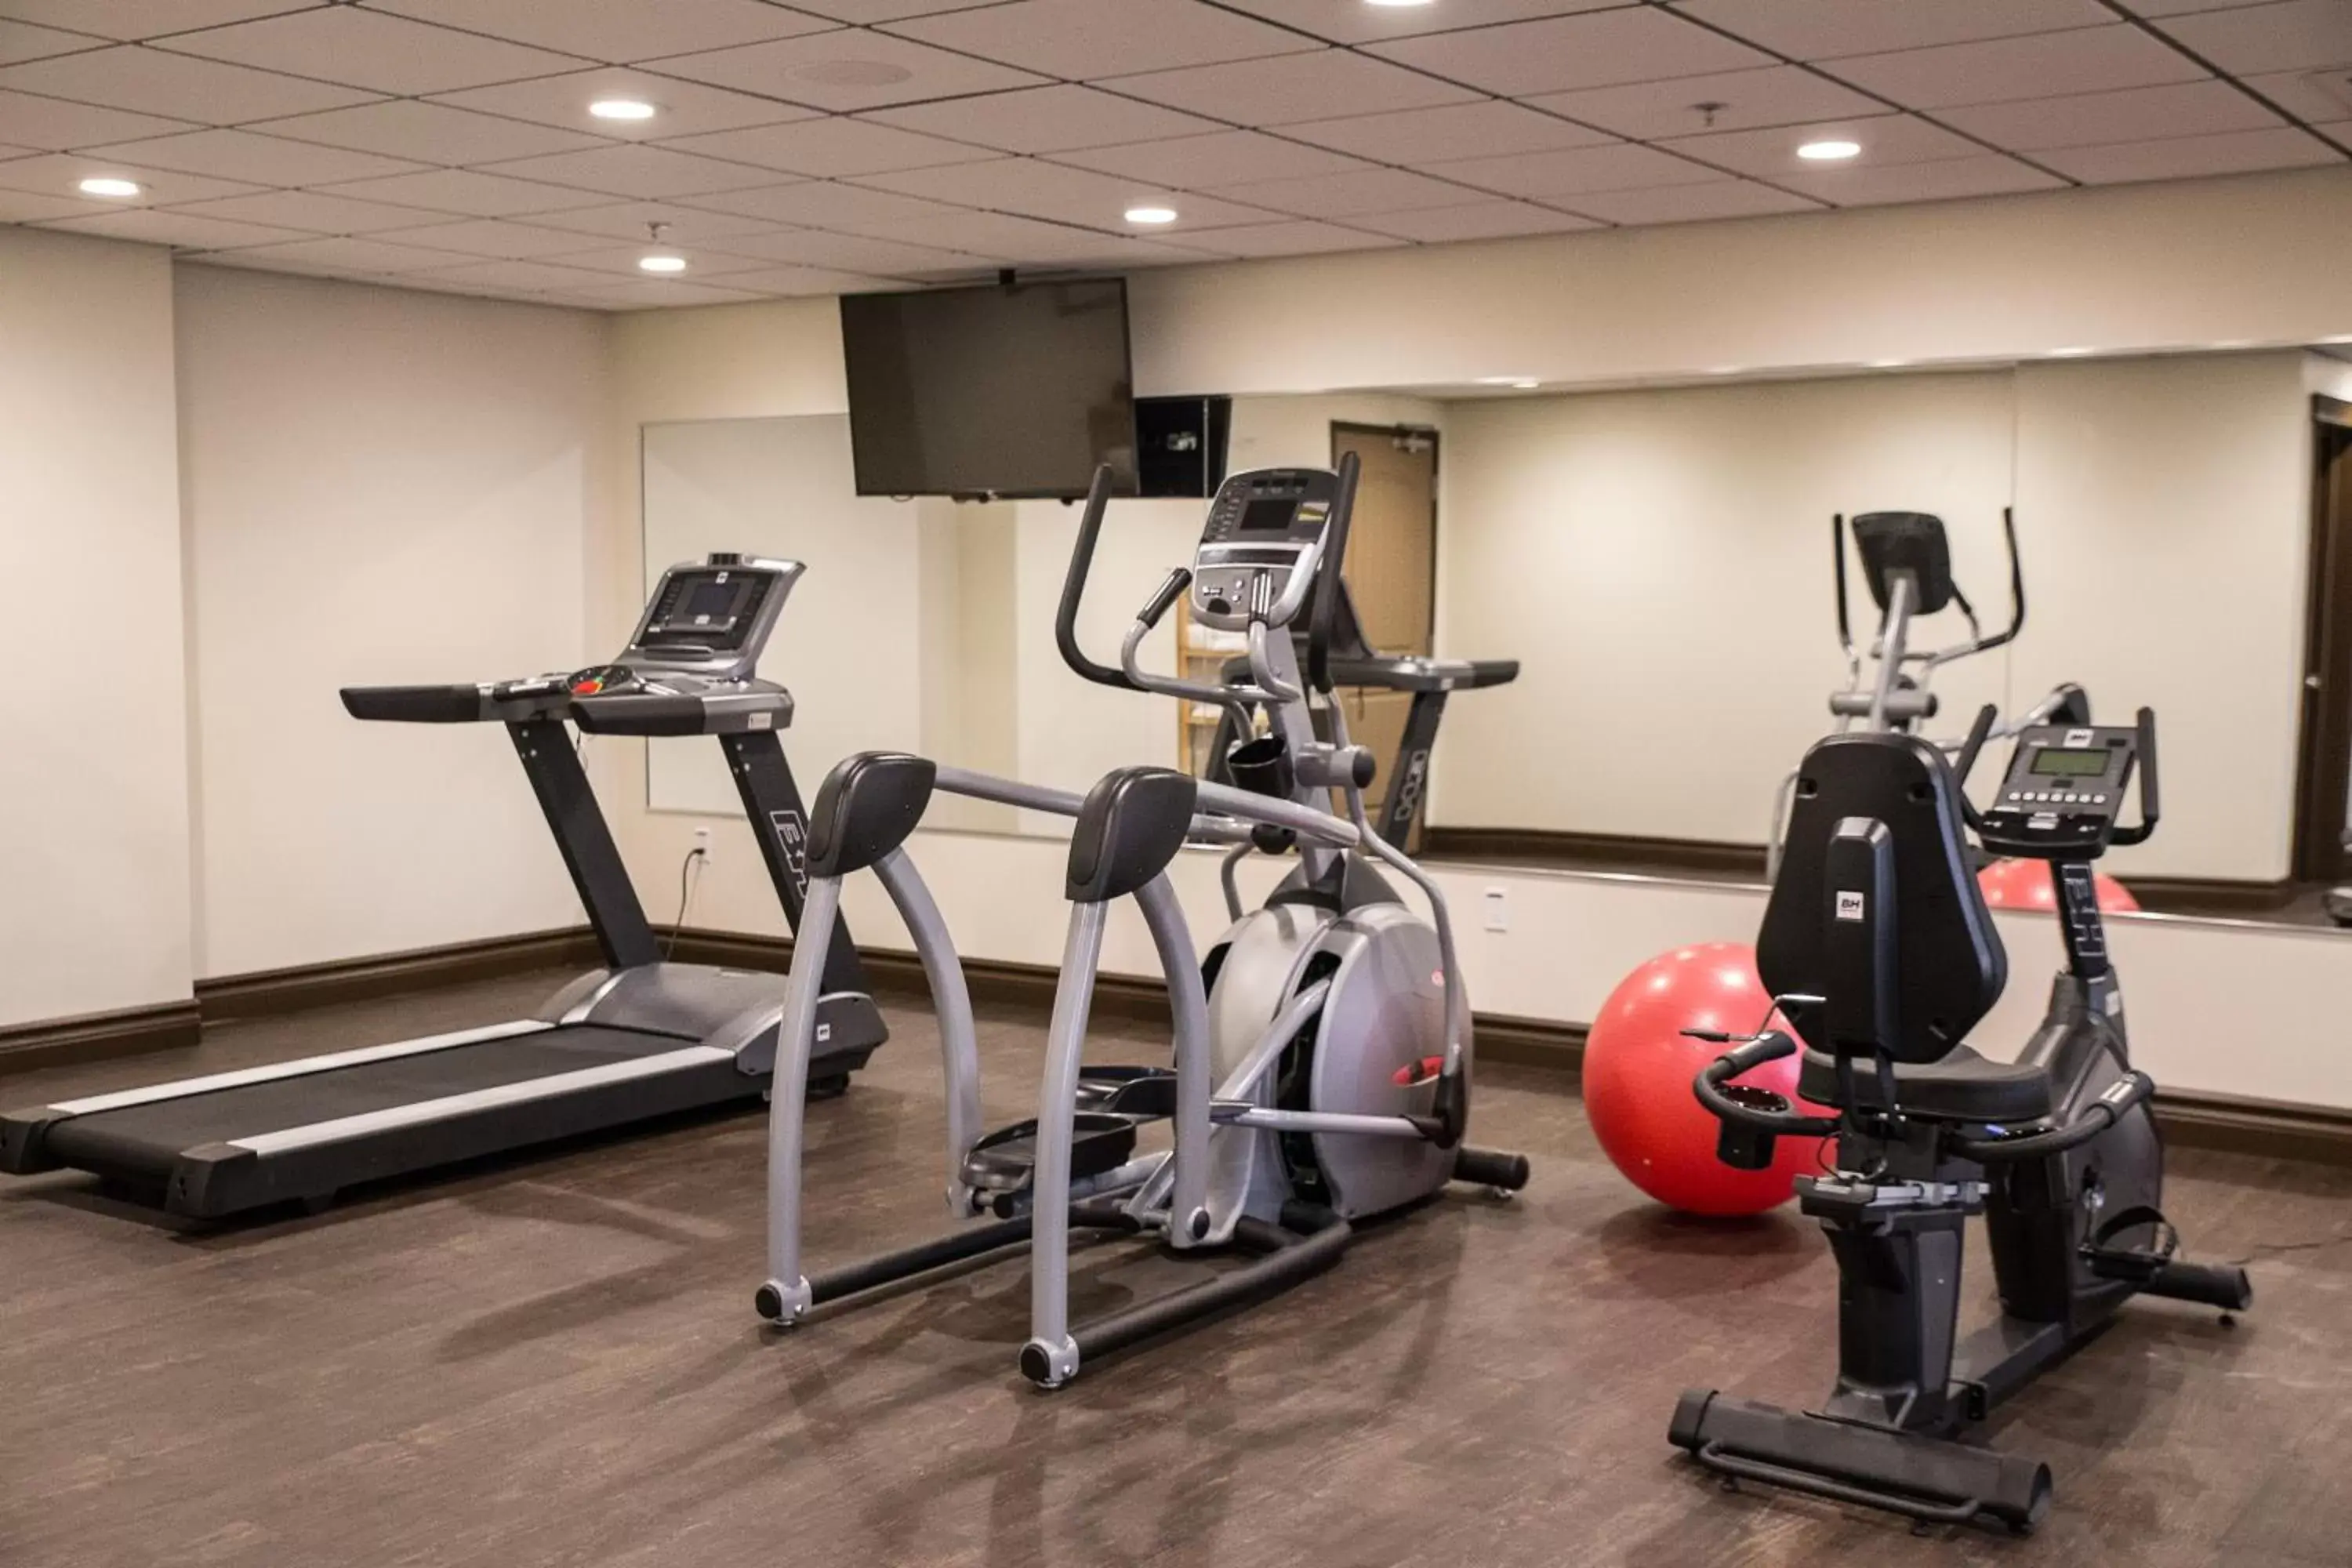 Fitness centre/facilities, Fitness Center/Facilities in Chateau Nova Peace River